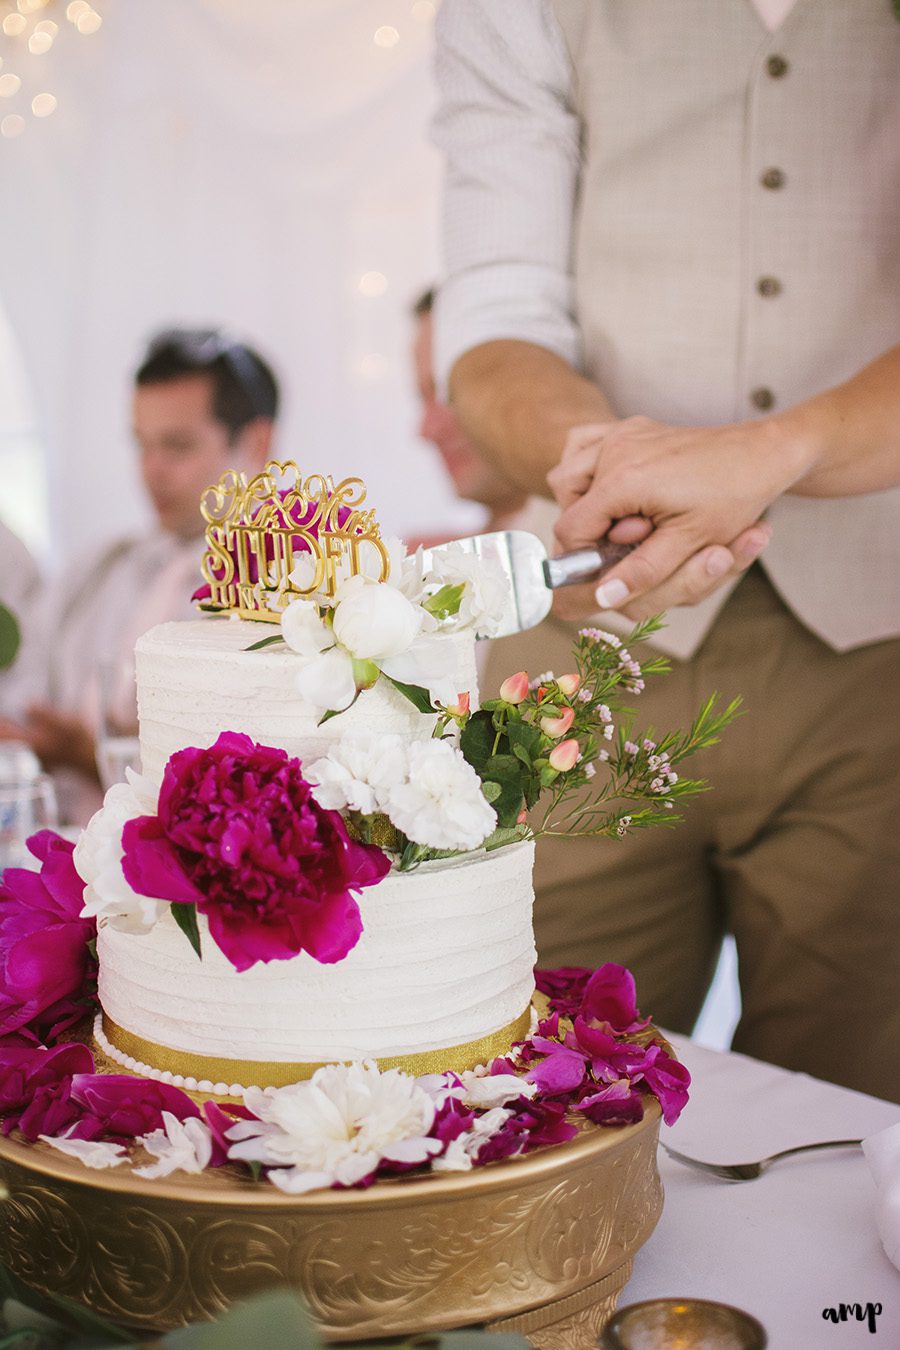 cutting the cake | Ali and Joe's #gardenwedding by amanda.matilda.photography | Colorado Wedding Photographer